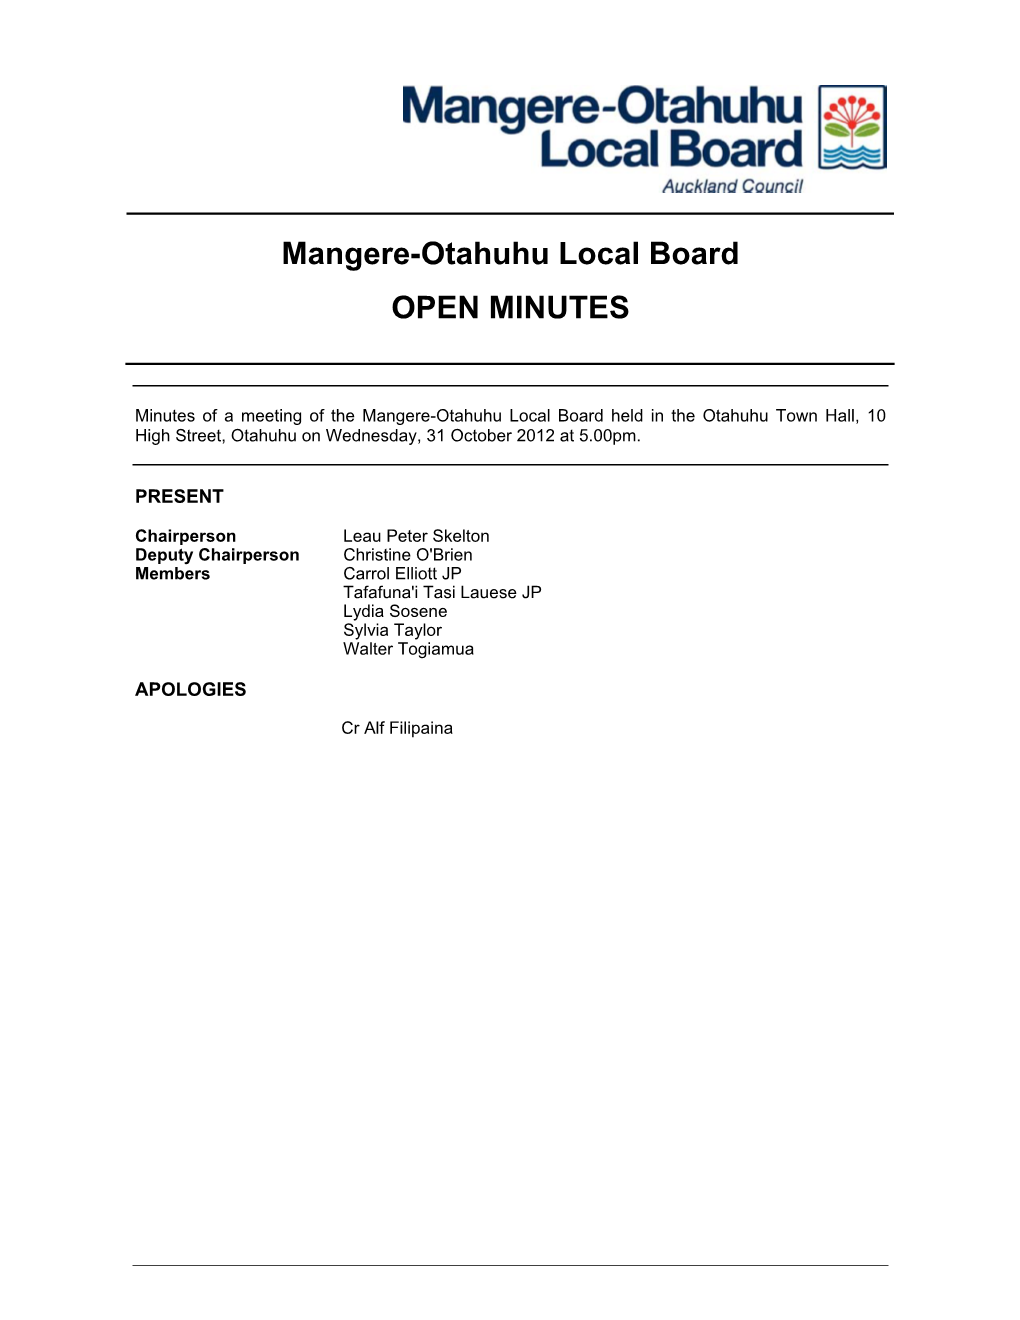 Mangere-Otahuhu Local Board Minutes